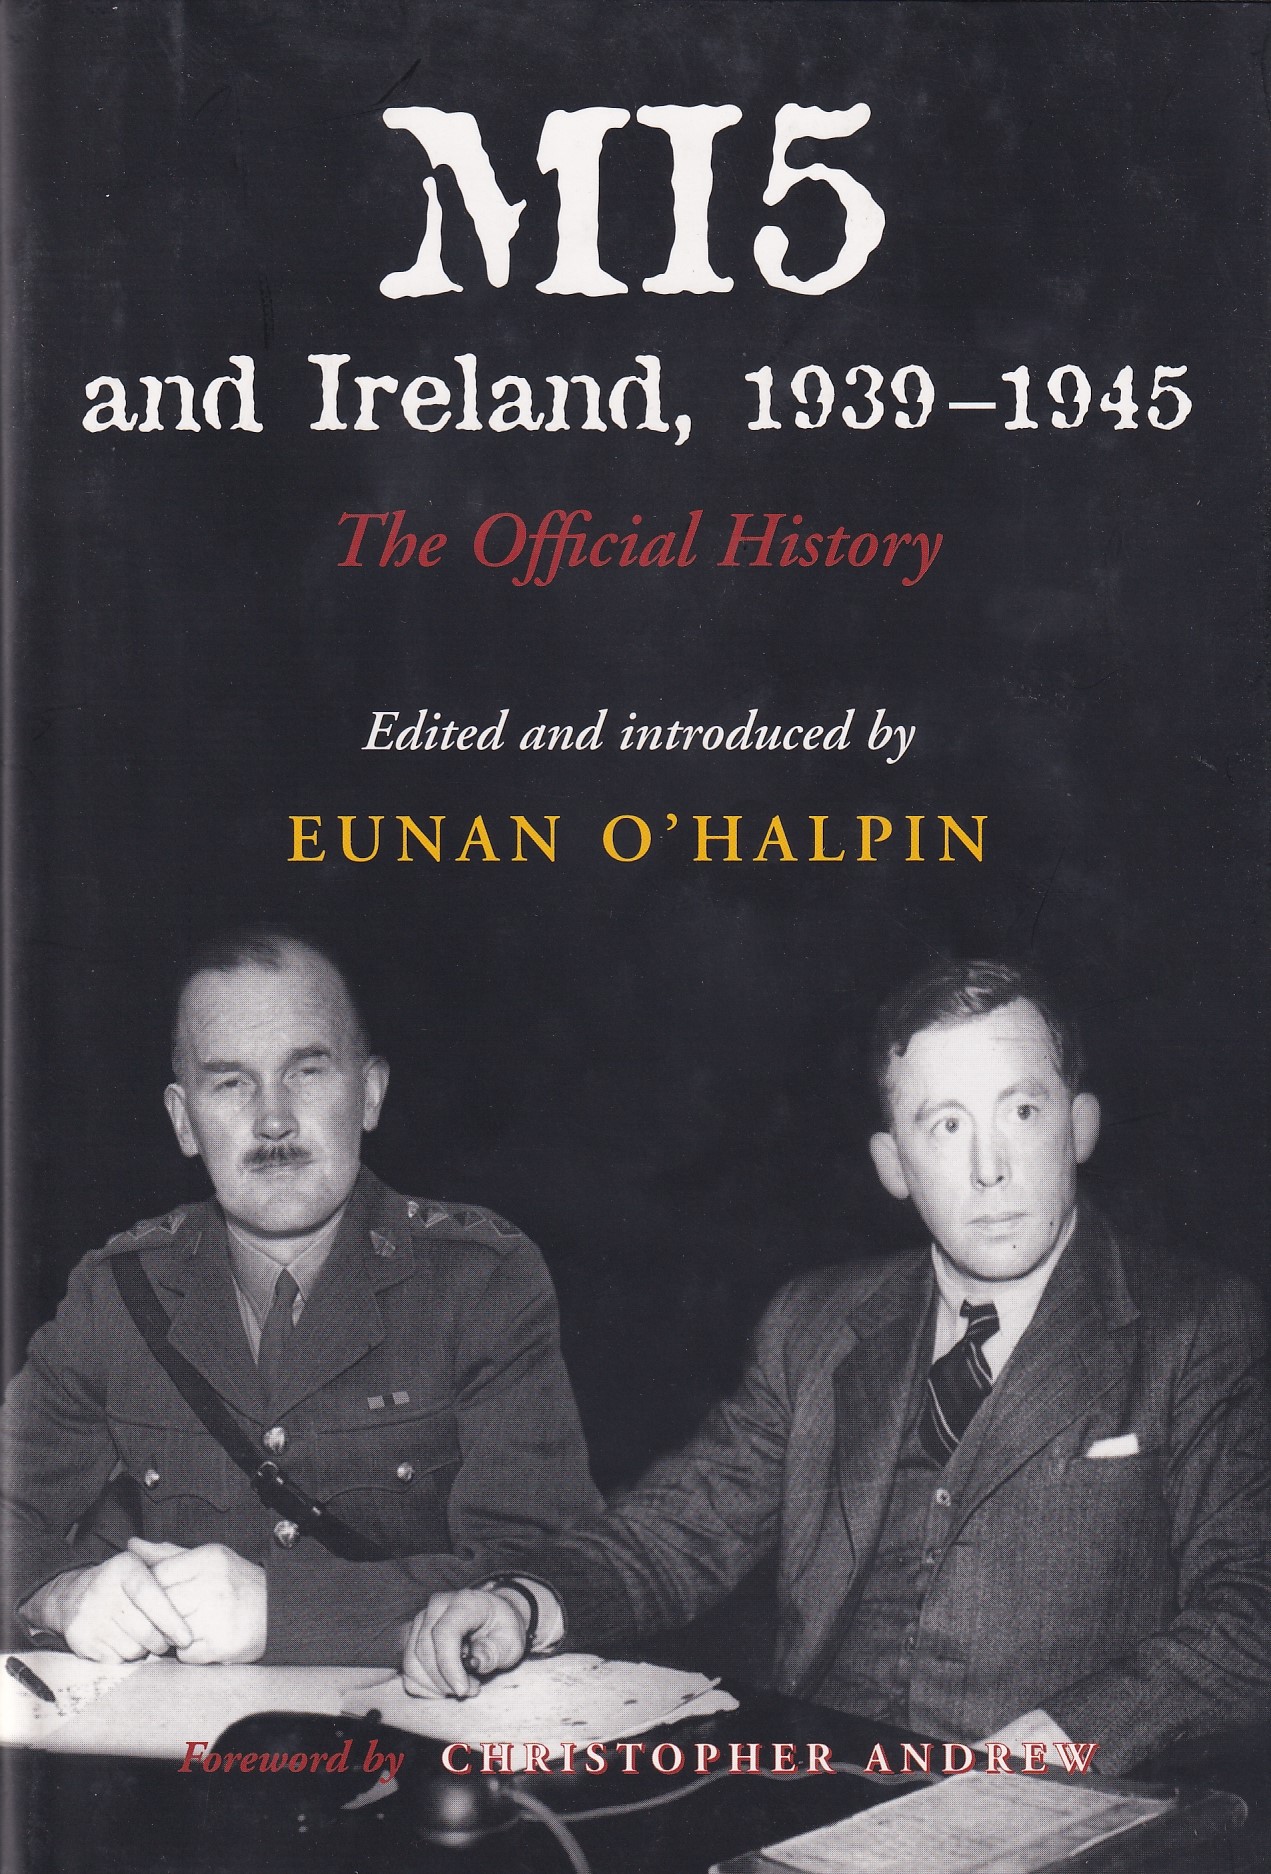 MI5 and Ireland, 1939-1945: The Official History | Eunan O'Halpin (Ed.) | Charlie Byrne's